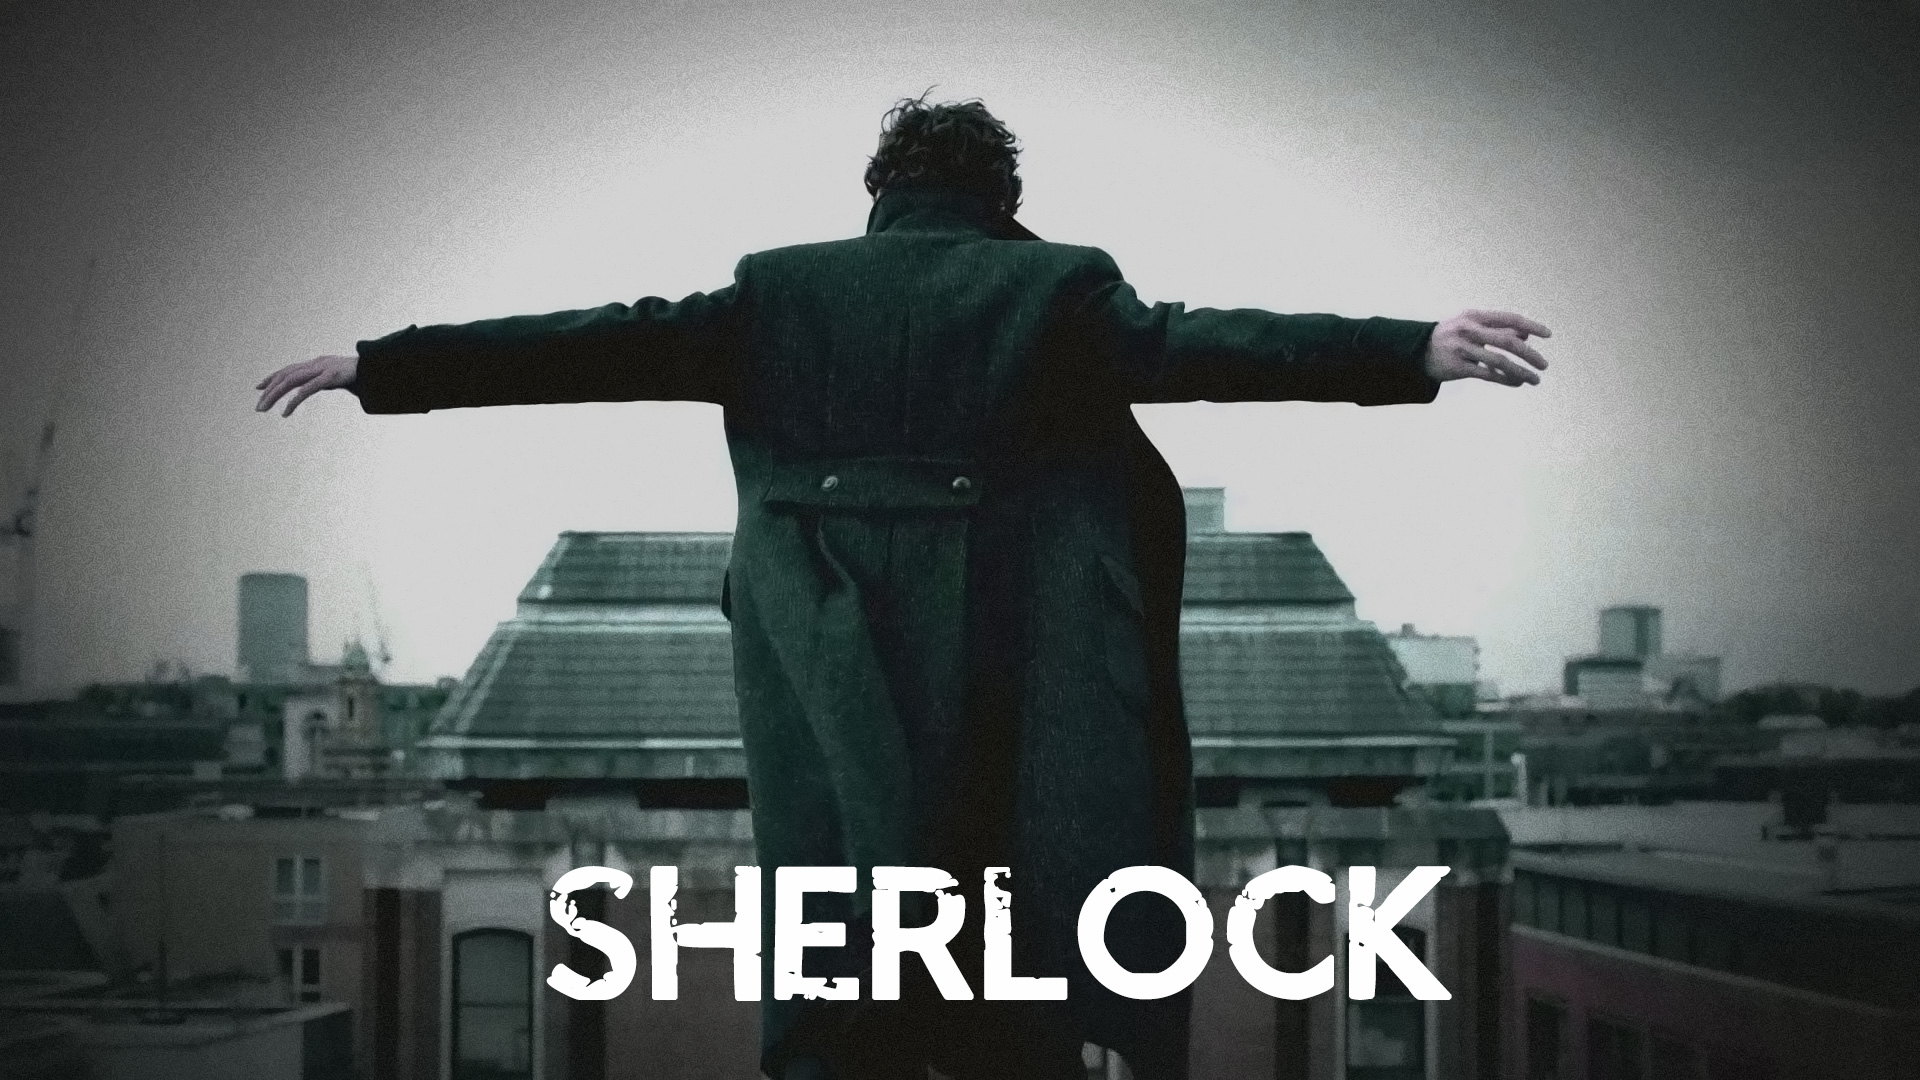 New Wallpaper From Sherlock Series Movie